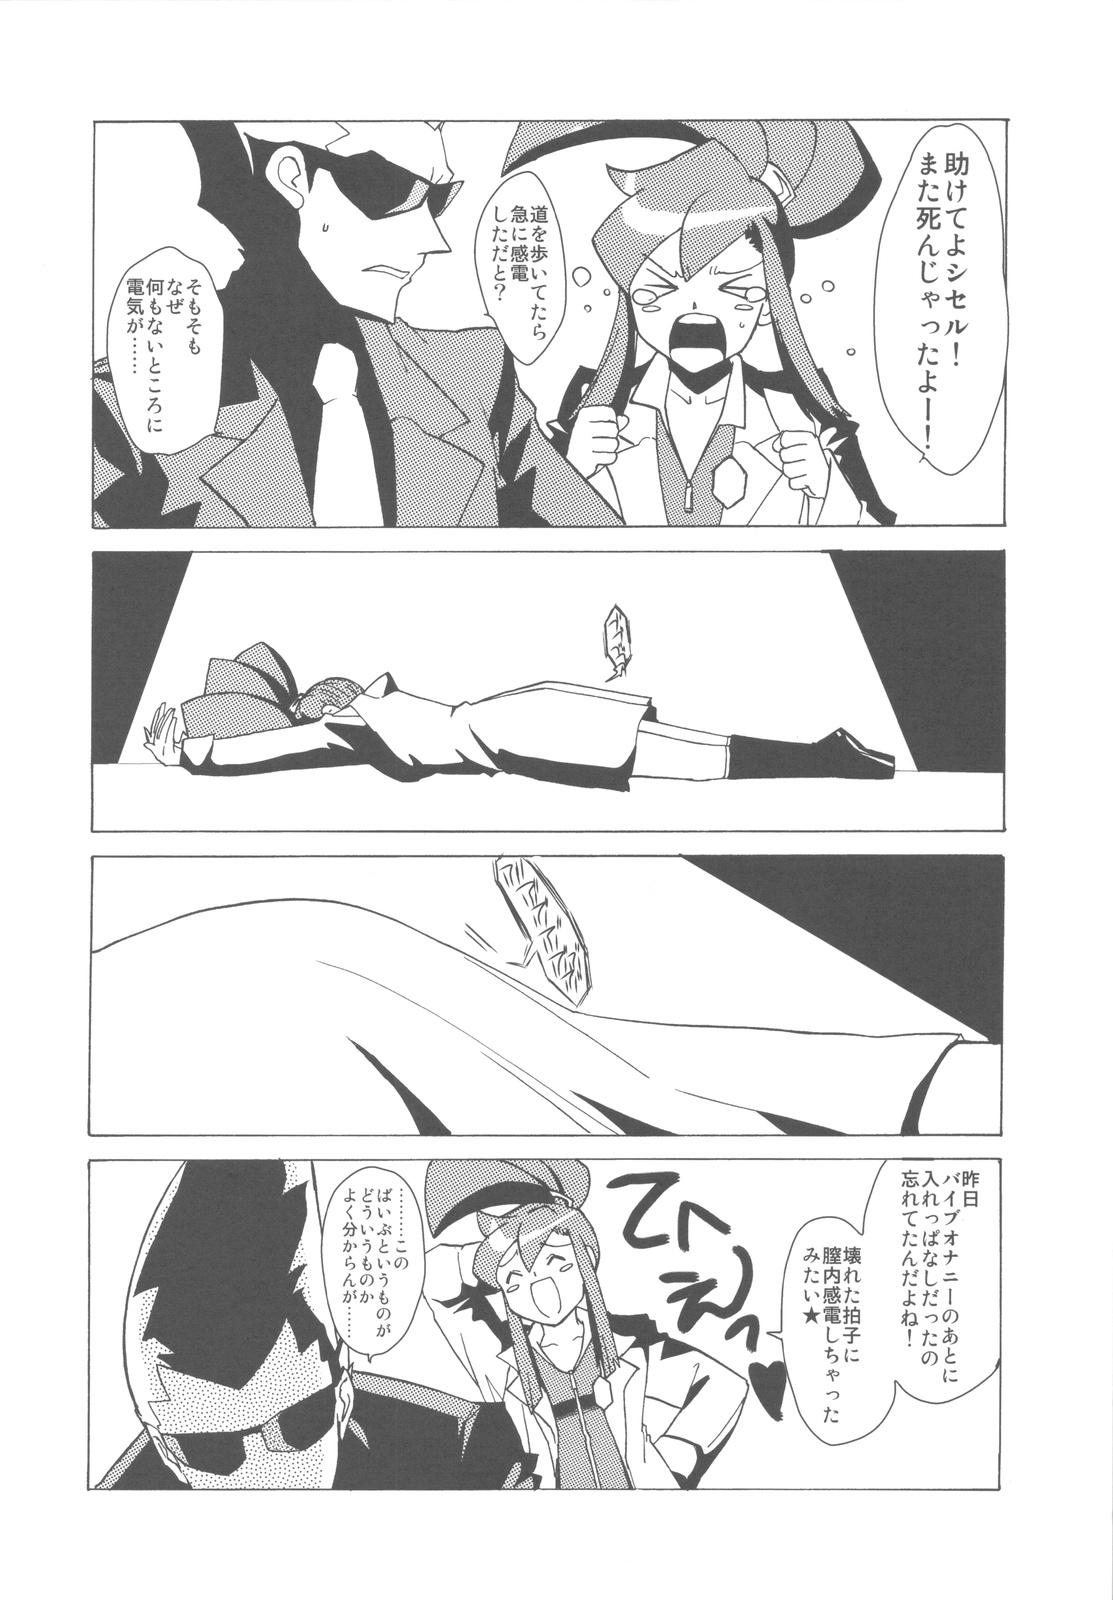 Harcore Dotanba Setogiwa Gakeppuchi 17 - Fullmetal alchemist Ghost trick Rica - Page 12